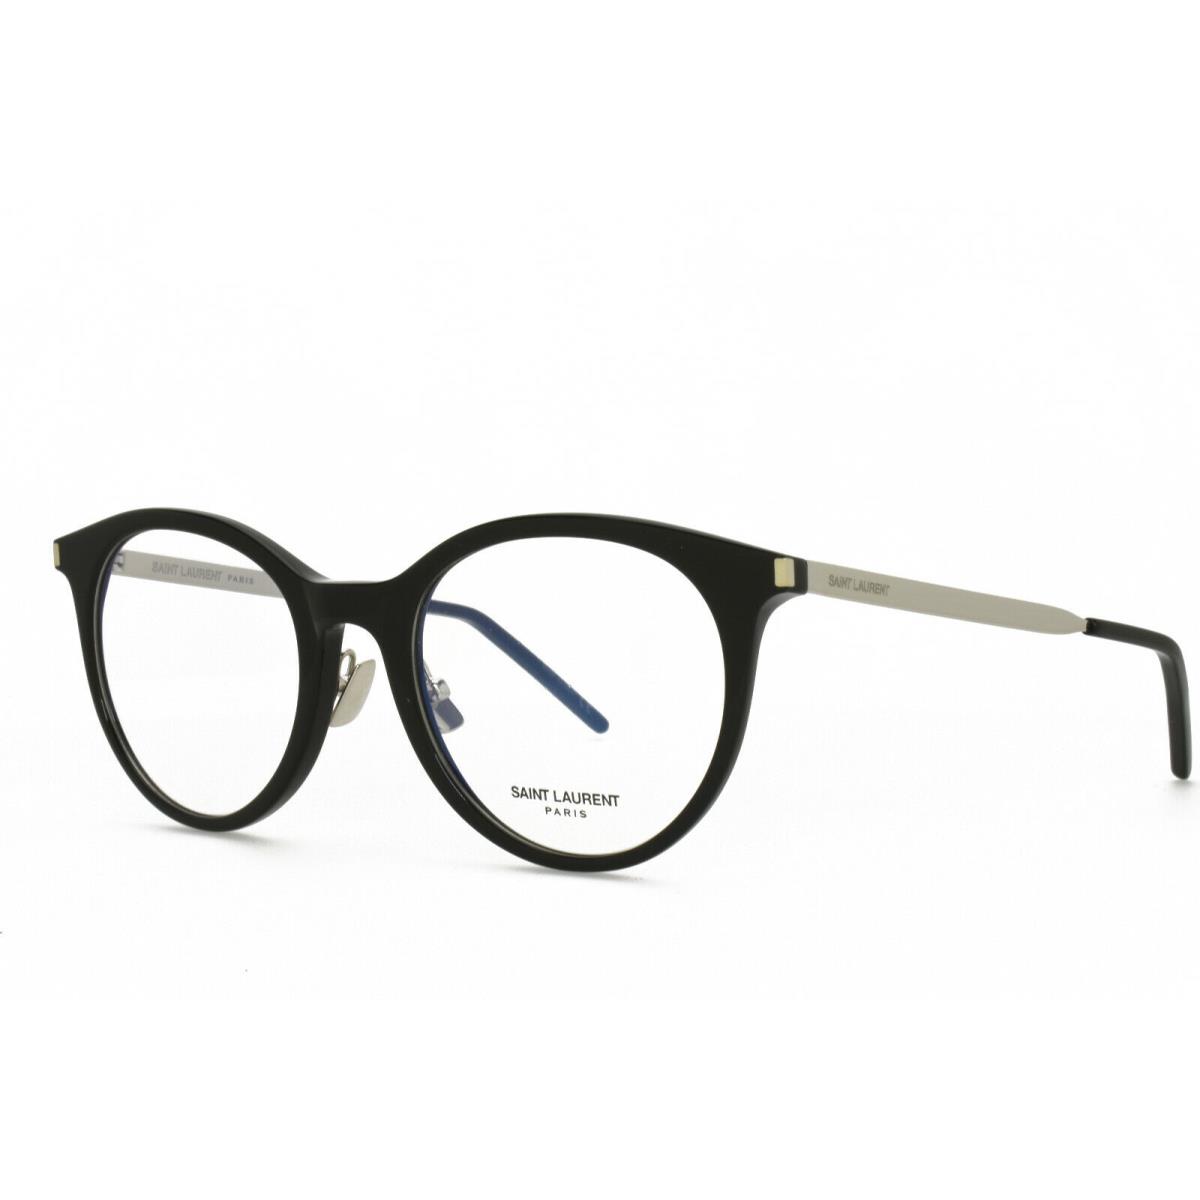 Saint Laurent Ysl 268 002 Black Silver Eyeglasses 50-20-145 - Frame: Black